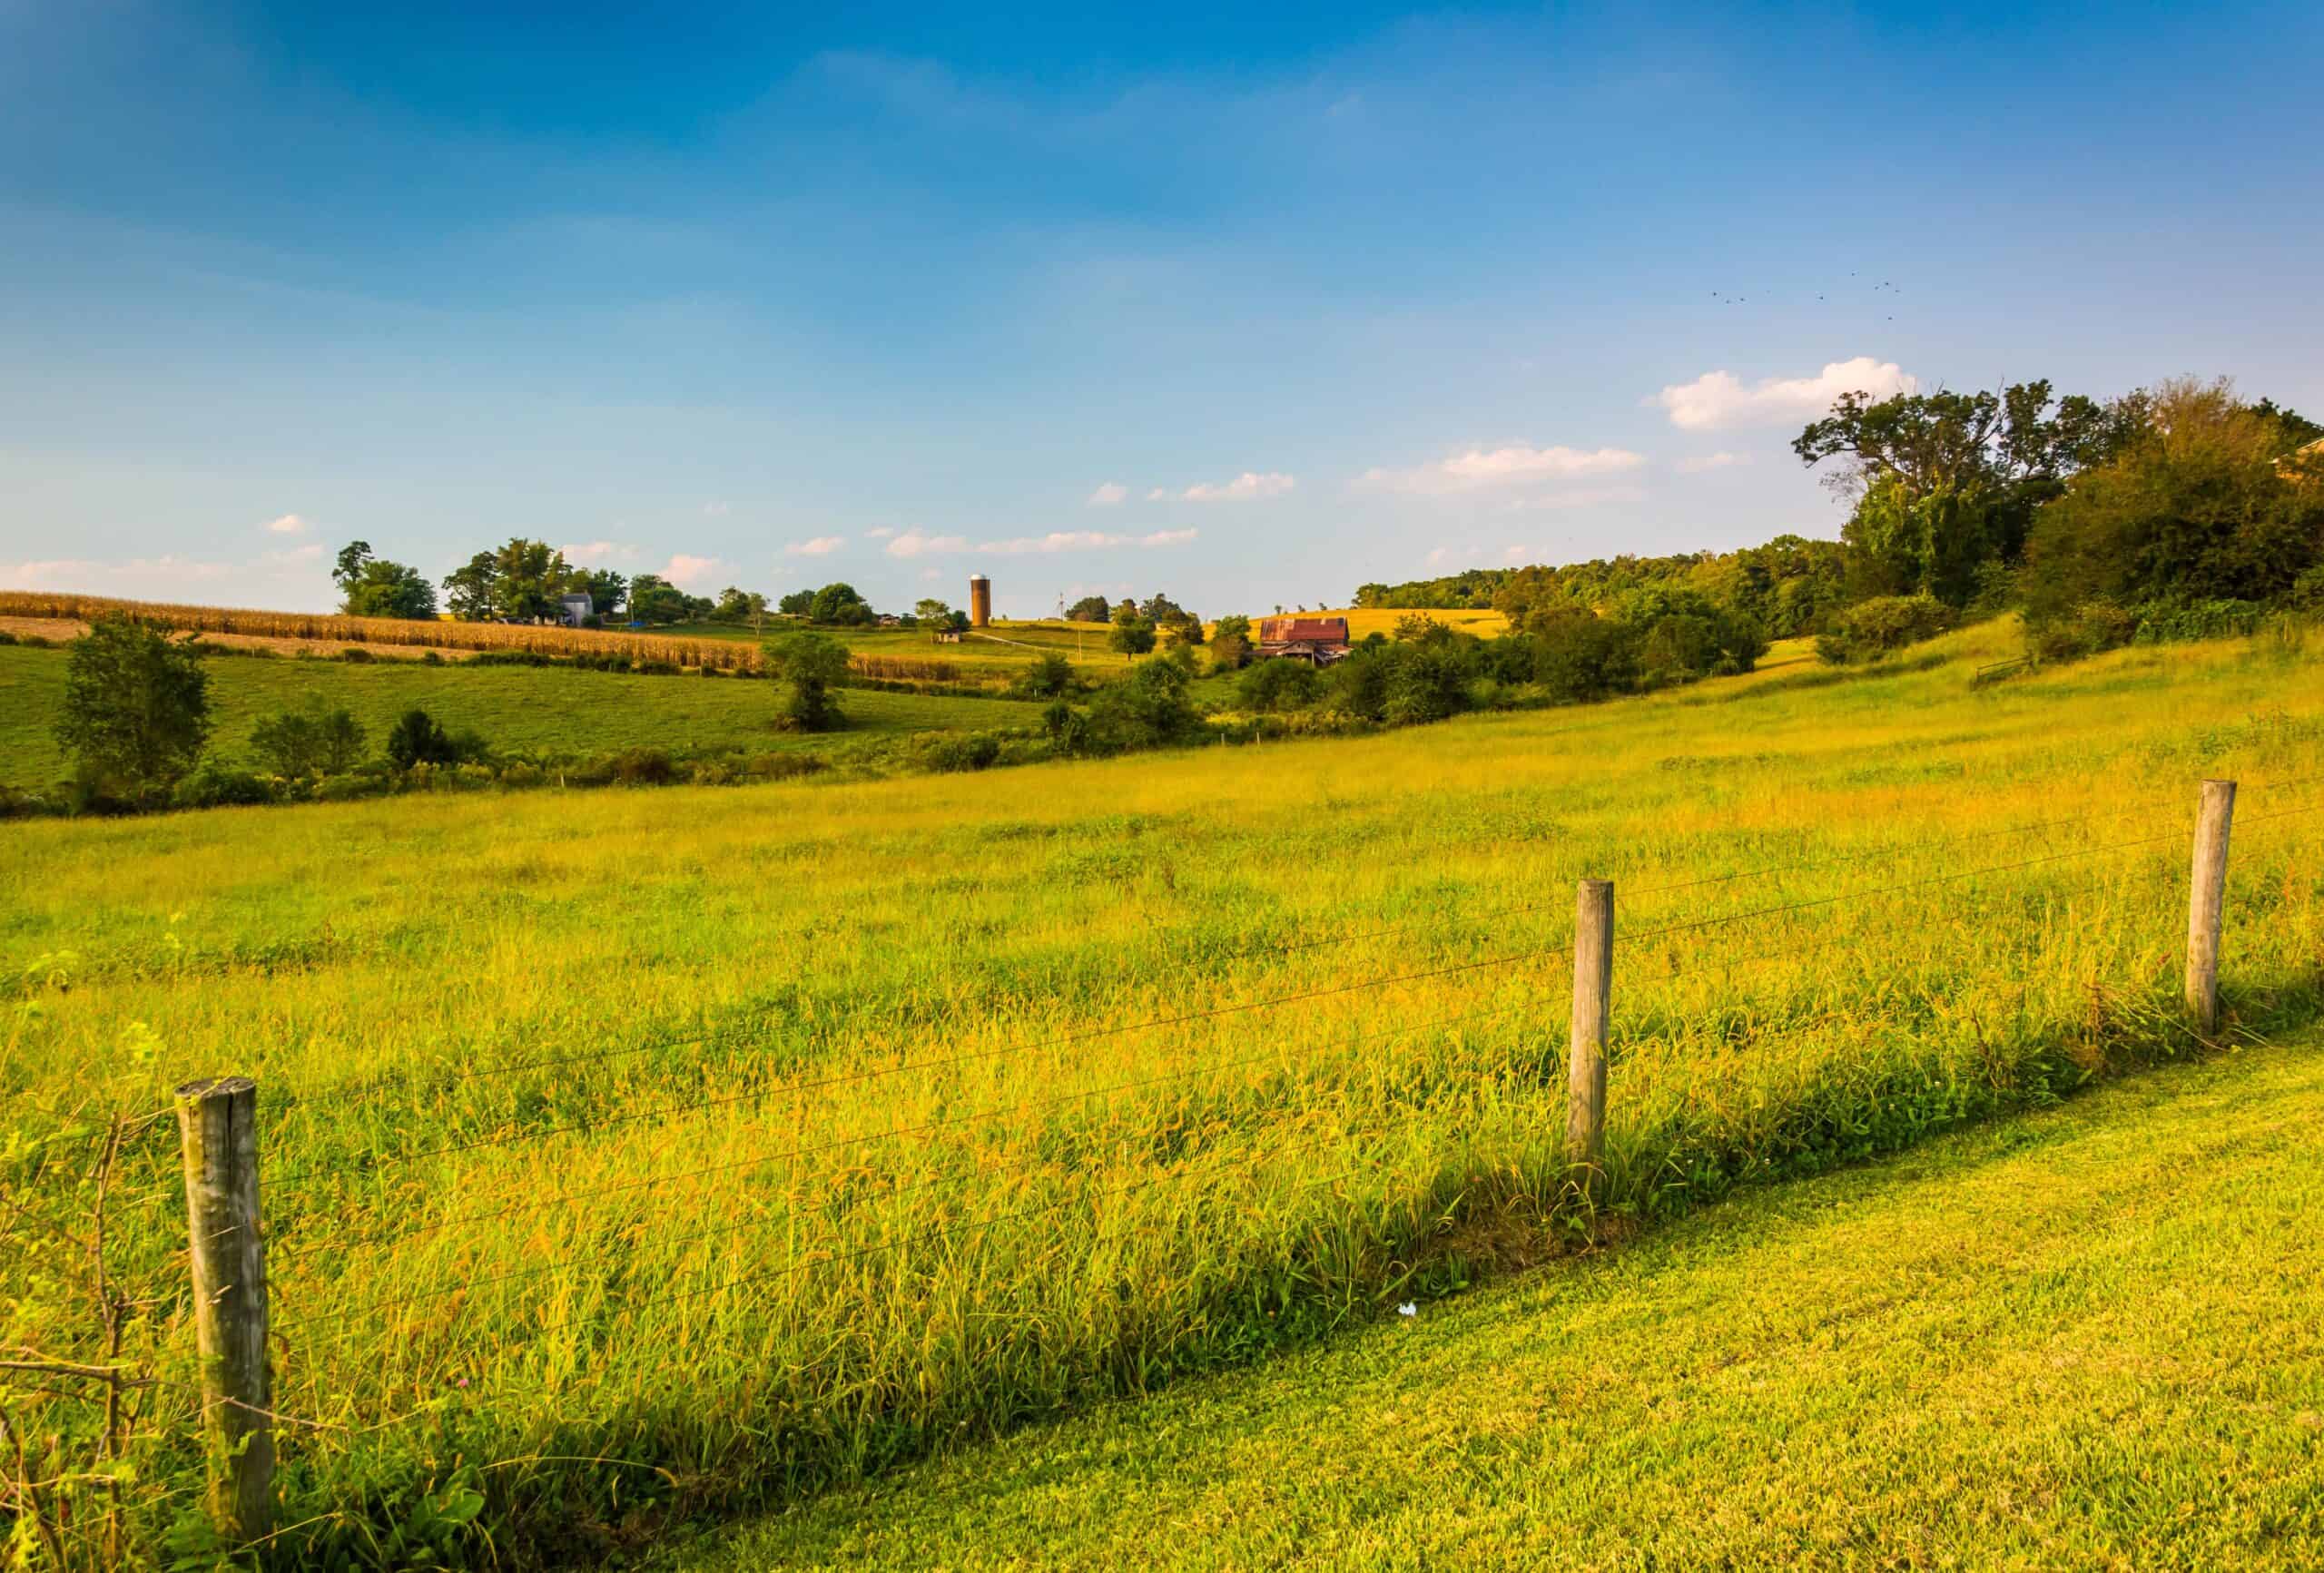 Howard, Maryland | Fence and farm field in rural Howard County, Maryland.